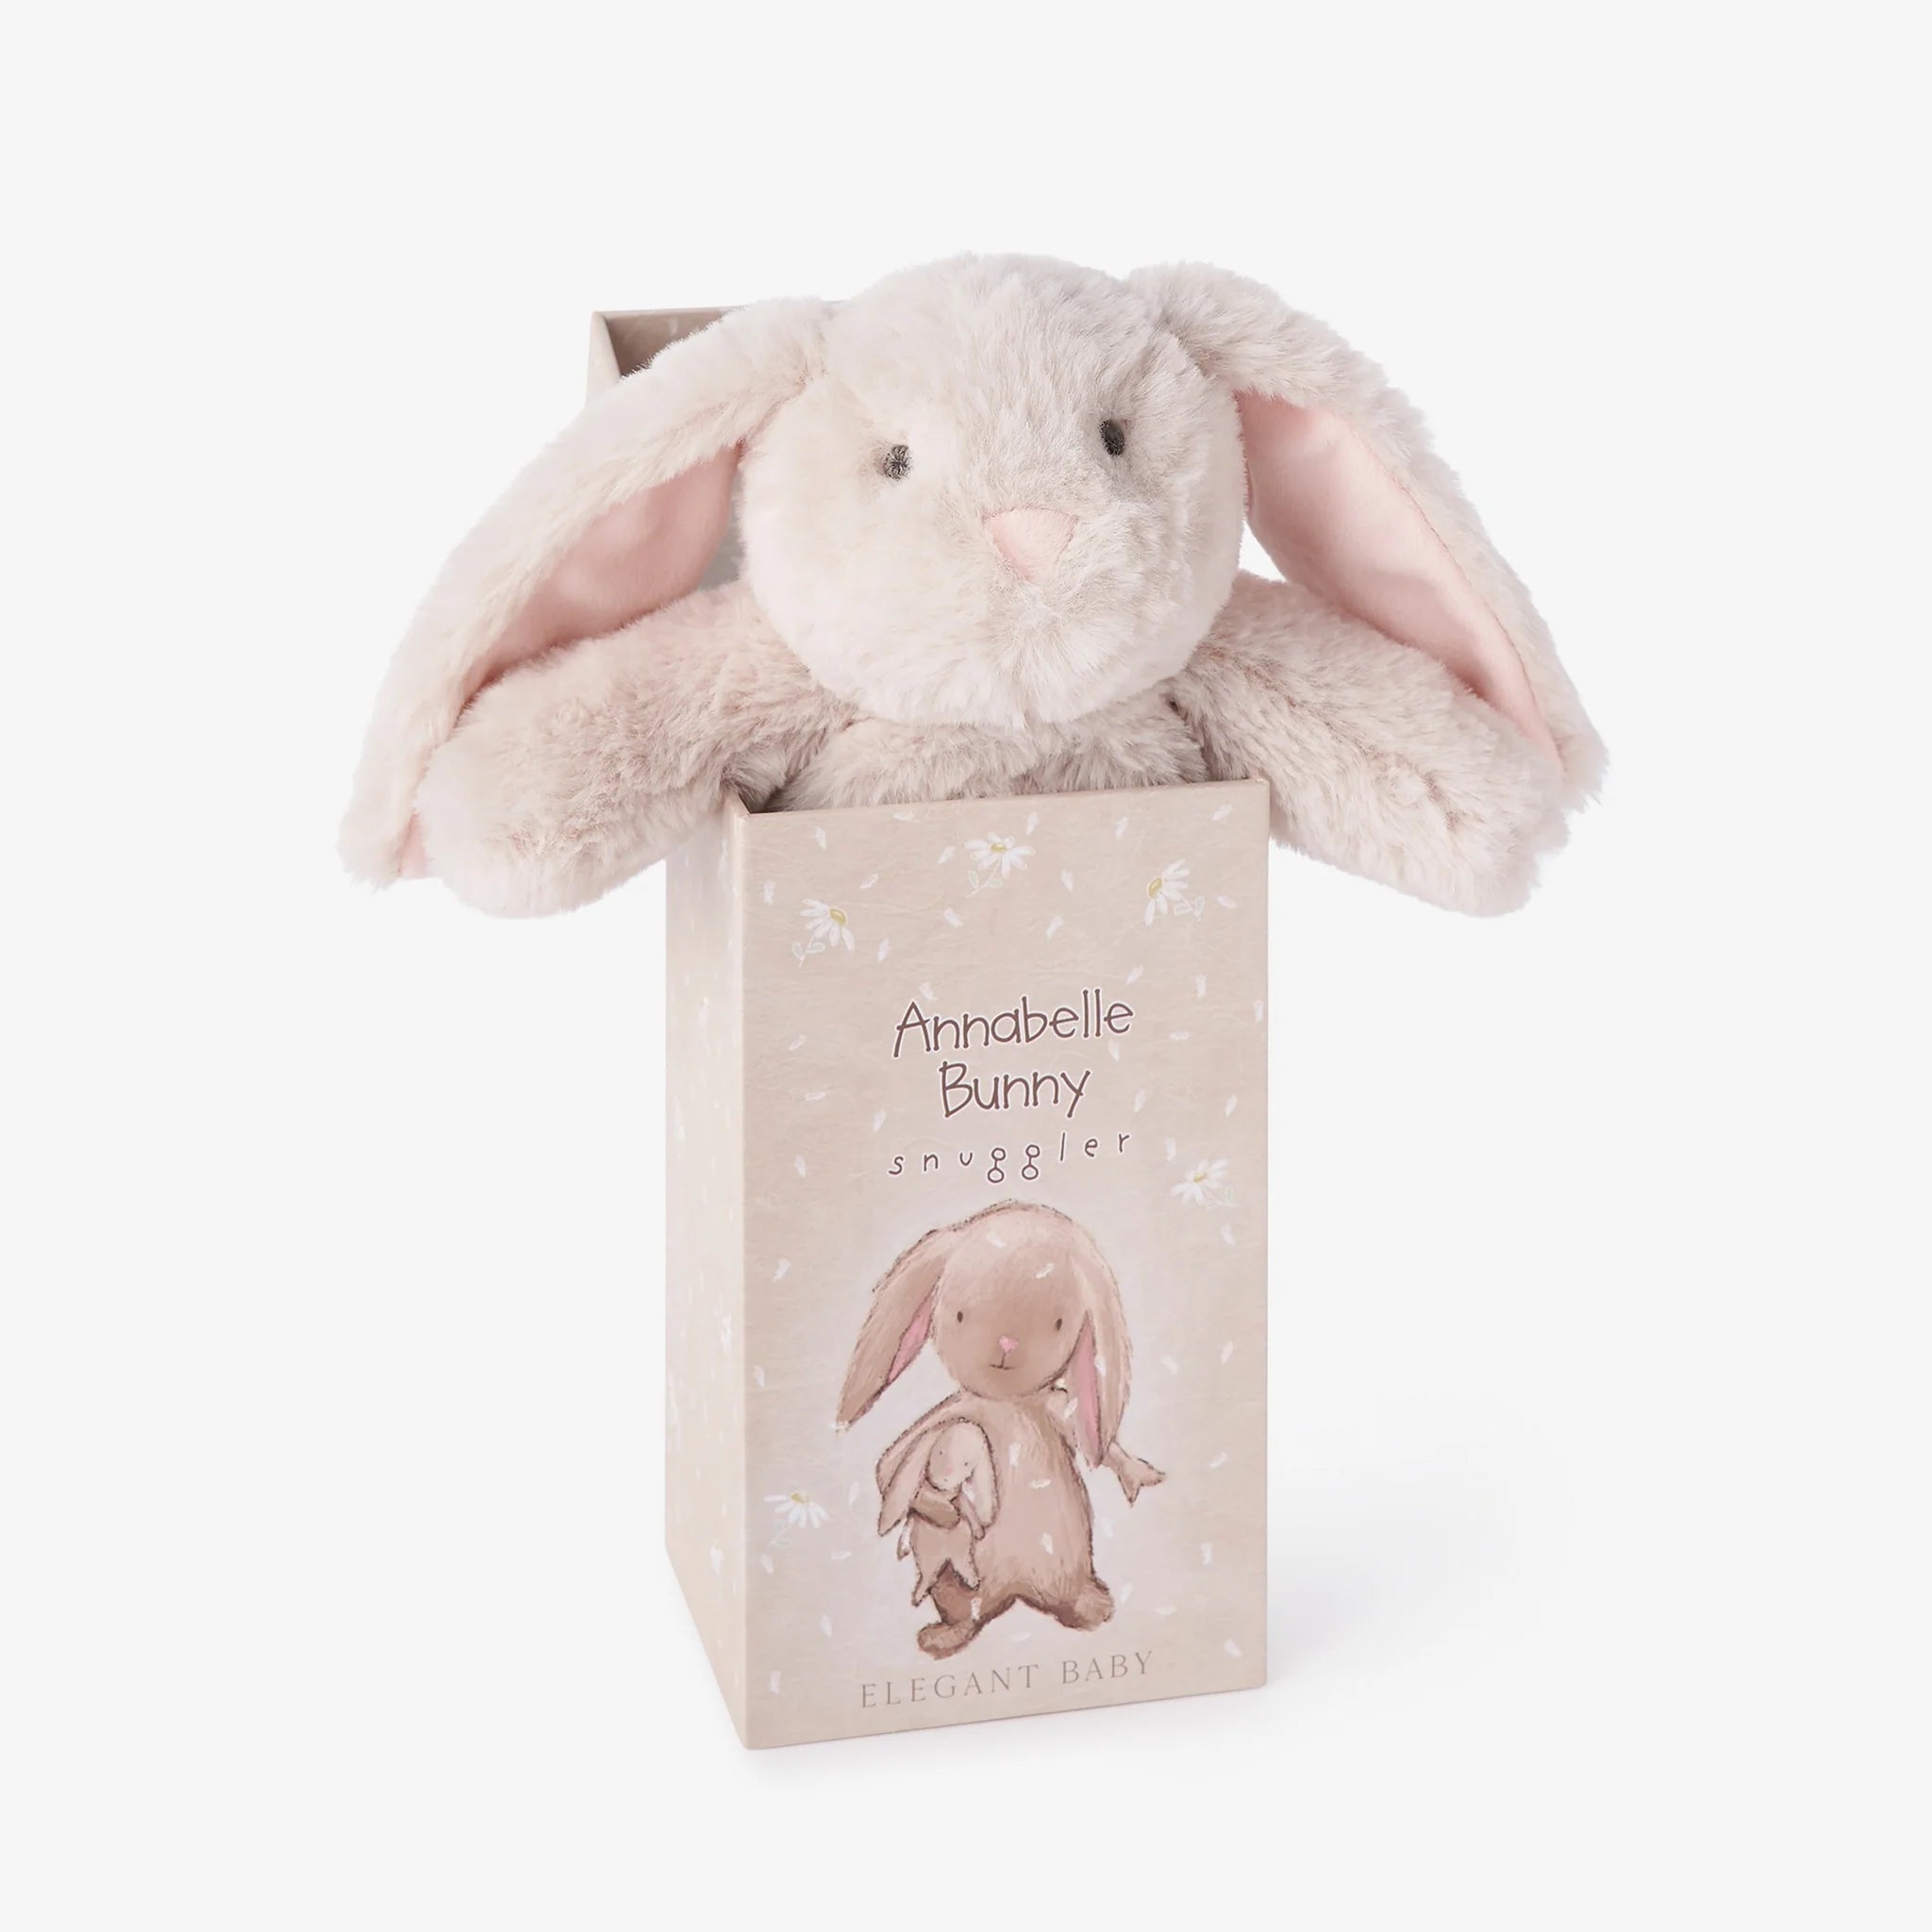 Annabelle Bunny Snuggler Plush Security Blanket w/Gift Box.